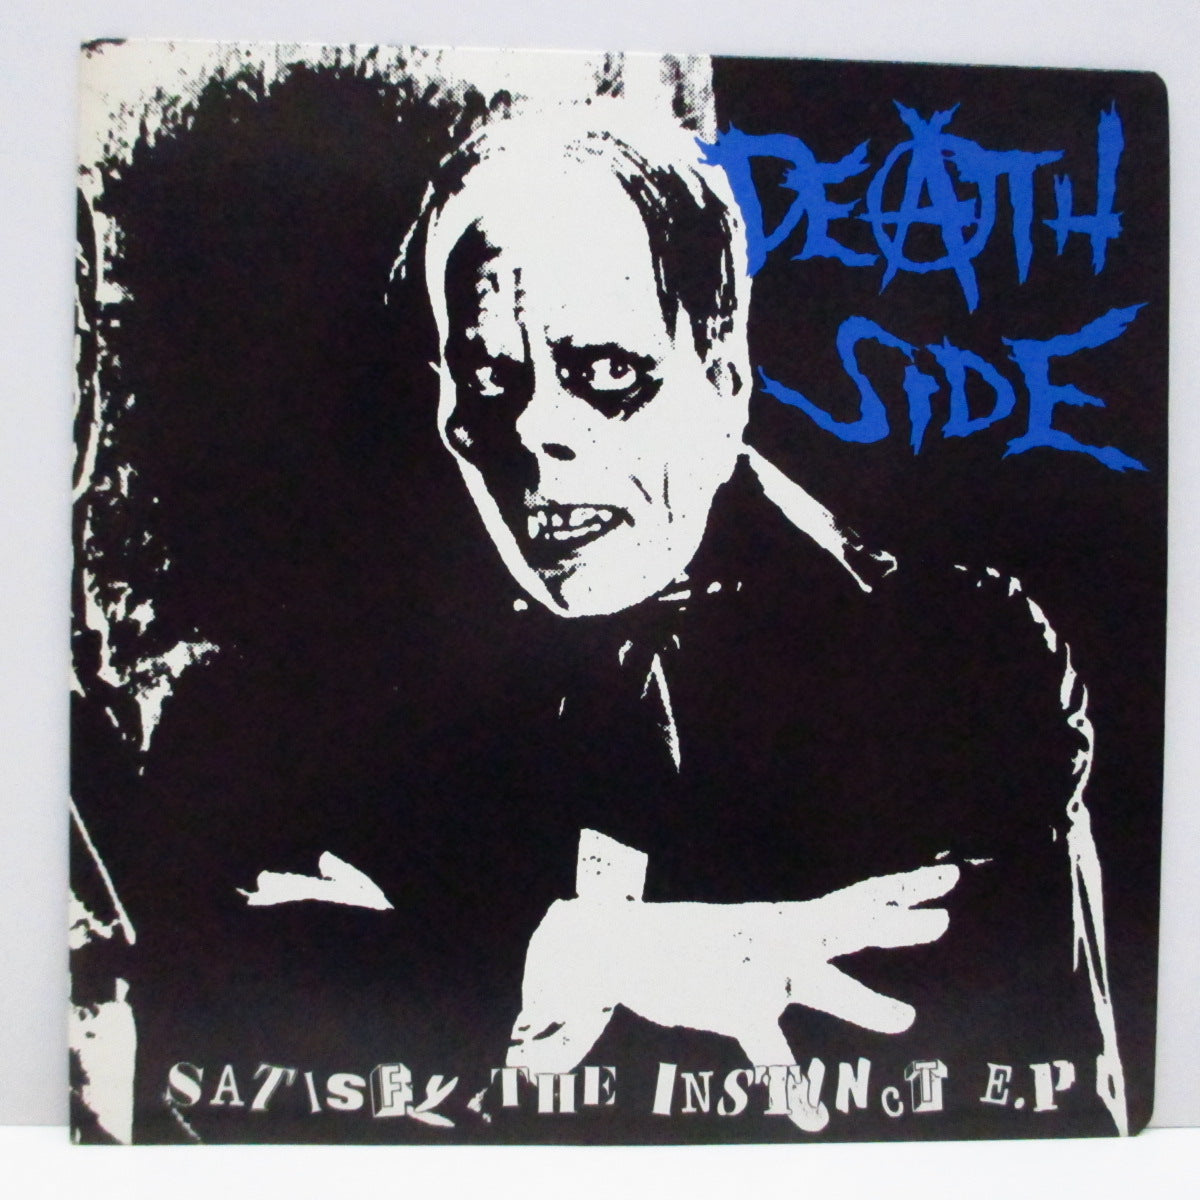 DEATH SIDE - Satisfy The Instinct E.P. (Japan Orig.7)